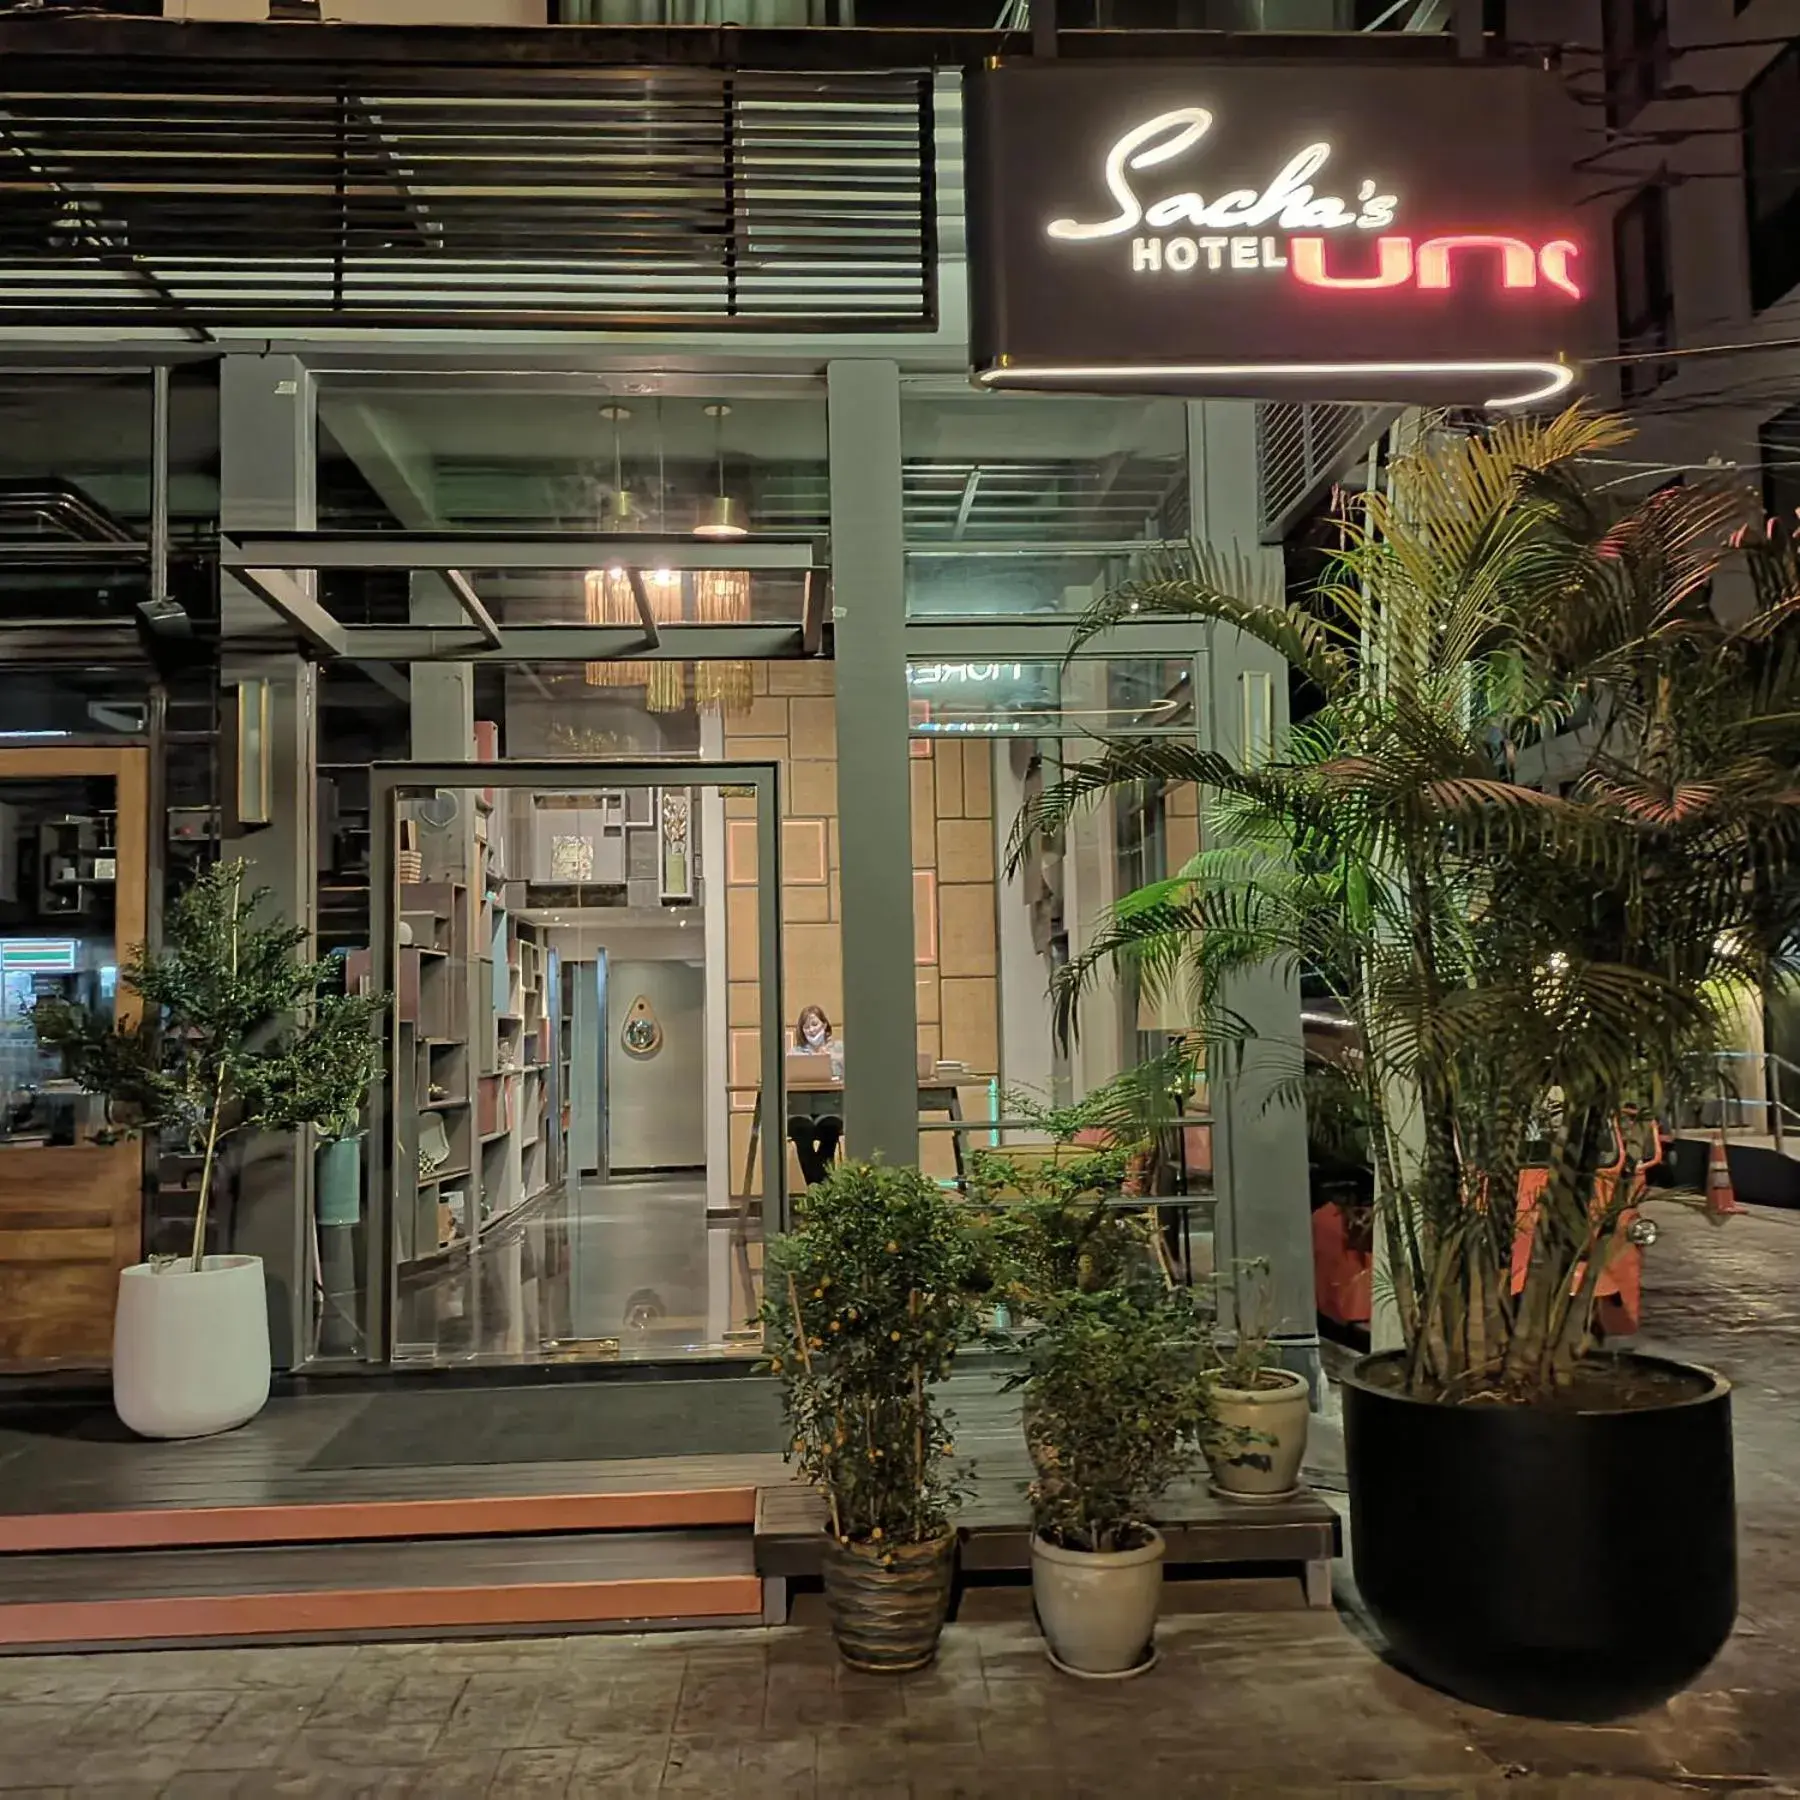 Facade/entrance in Sacha's Hotel Uno SHA